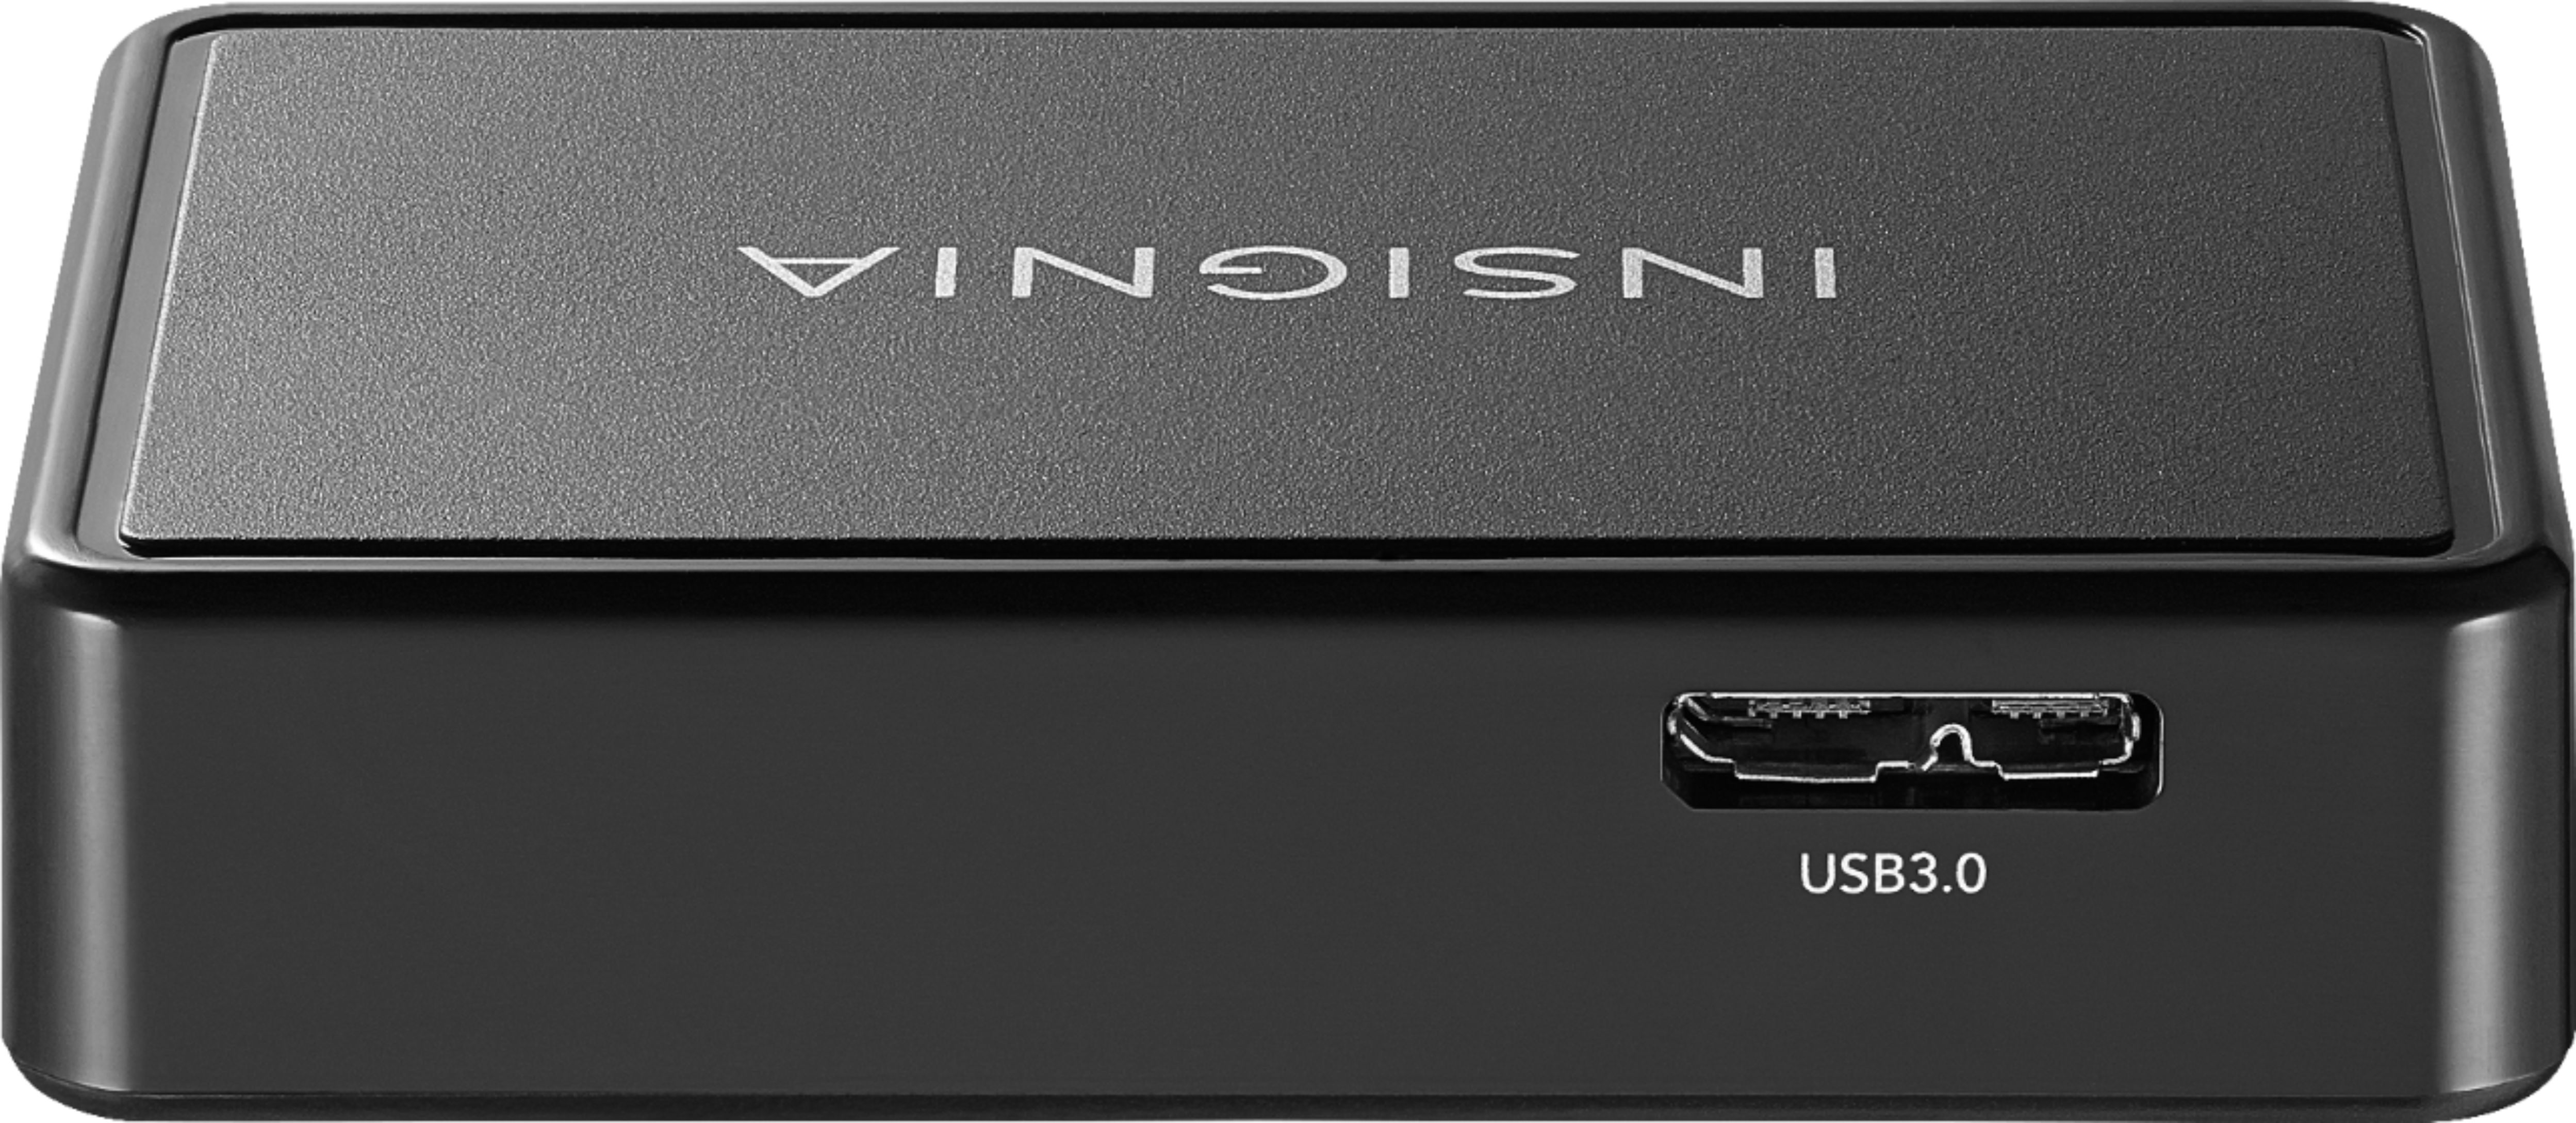 Insignia™ USB 3.0 Memory Card Reader Black NS  - Best Buy